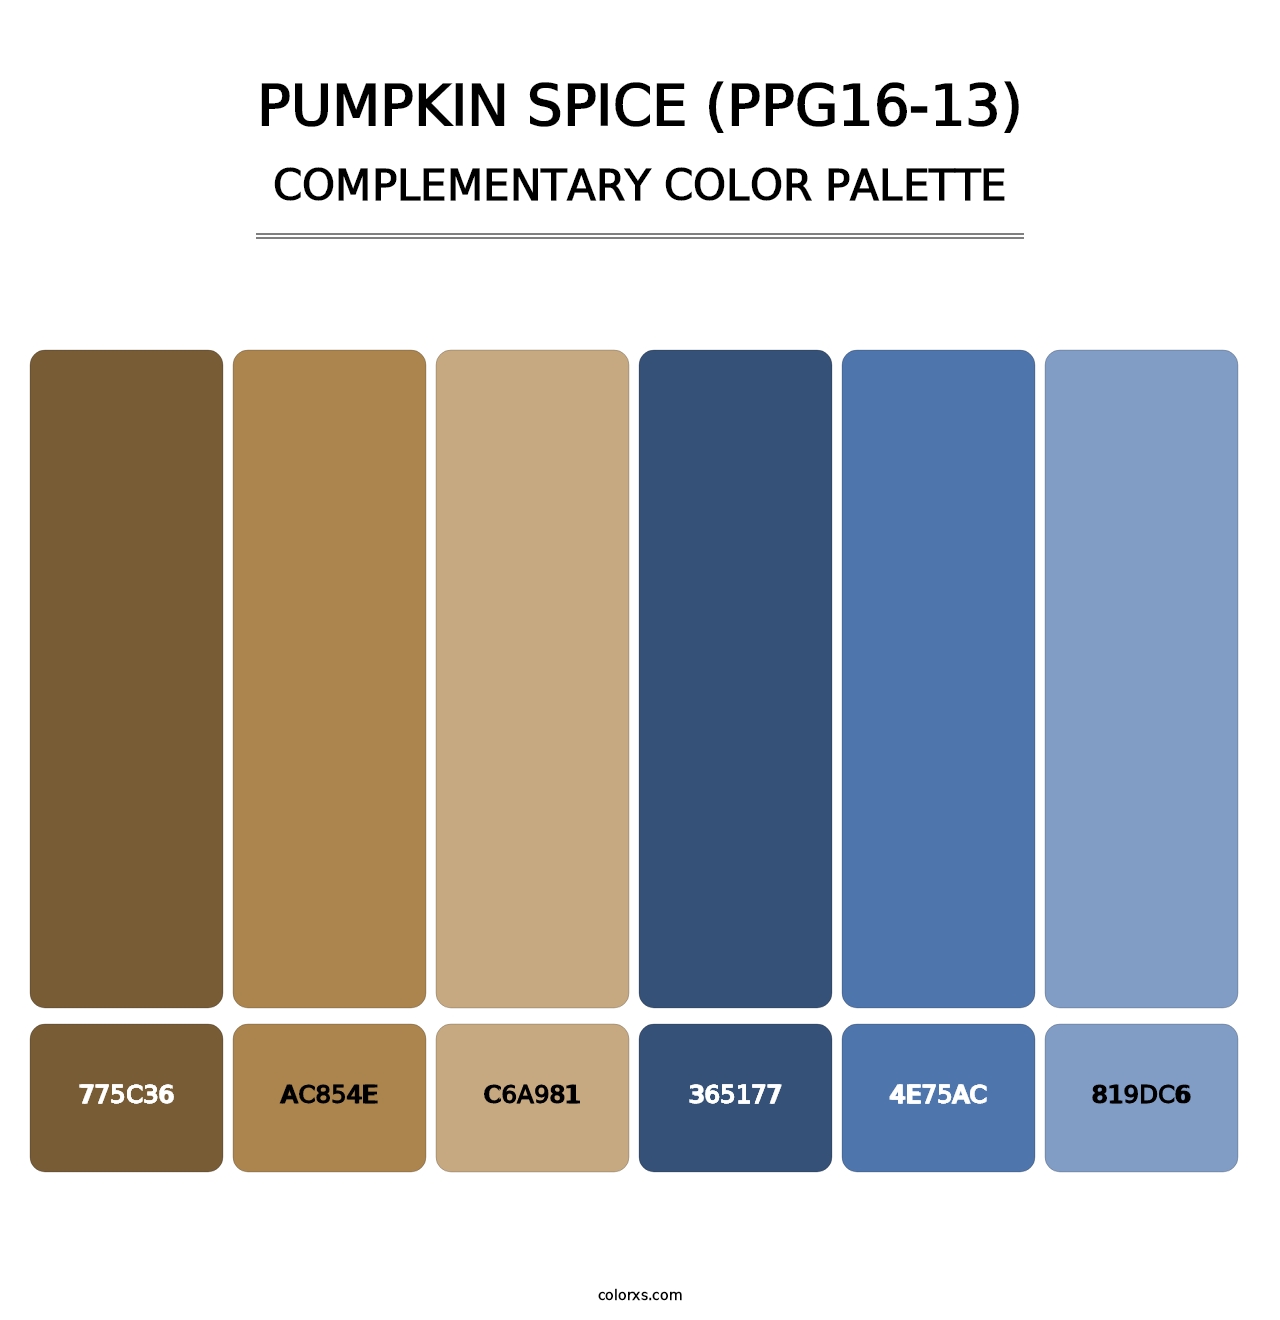 Pumpkin Spice (PPG16-13) - Complementary Color Palette